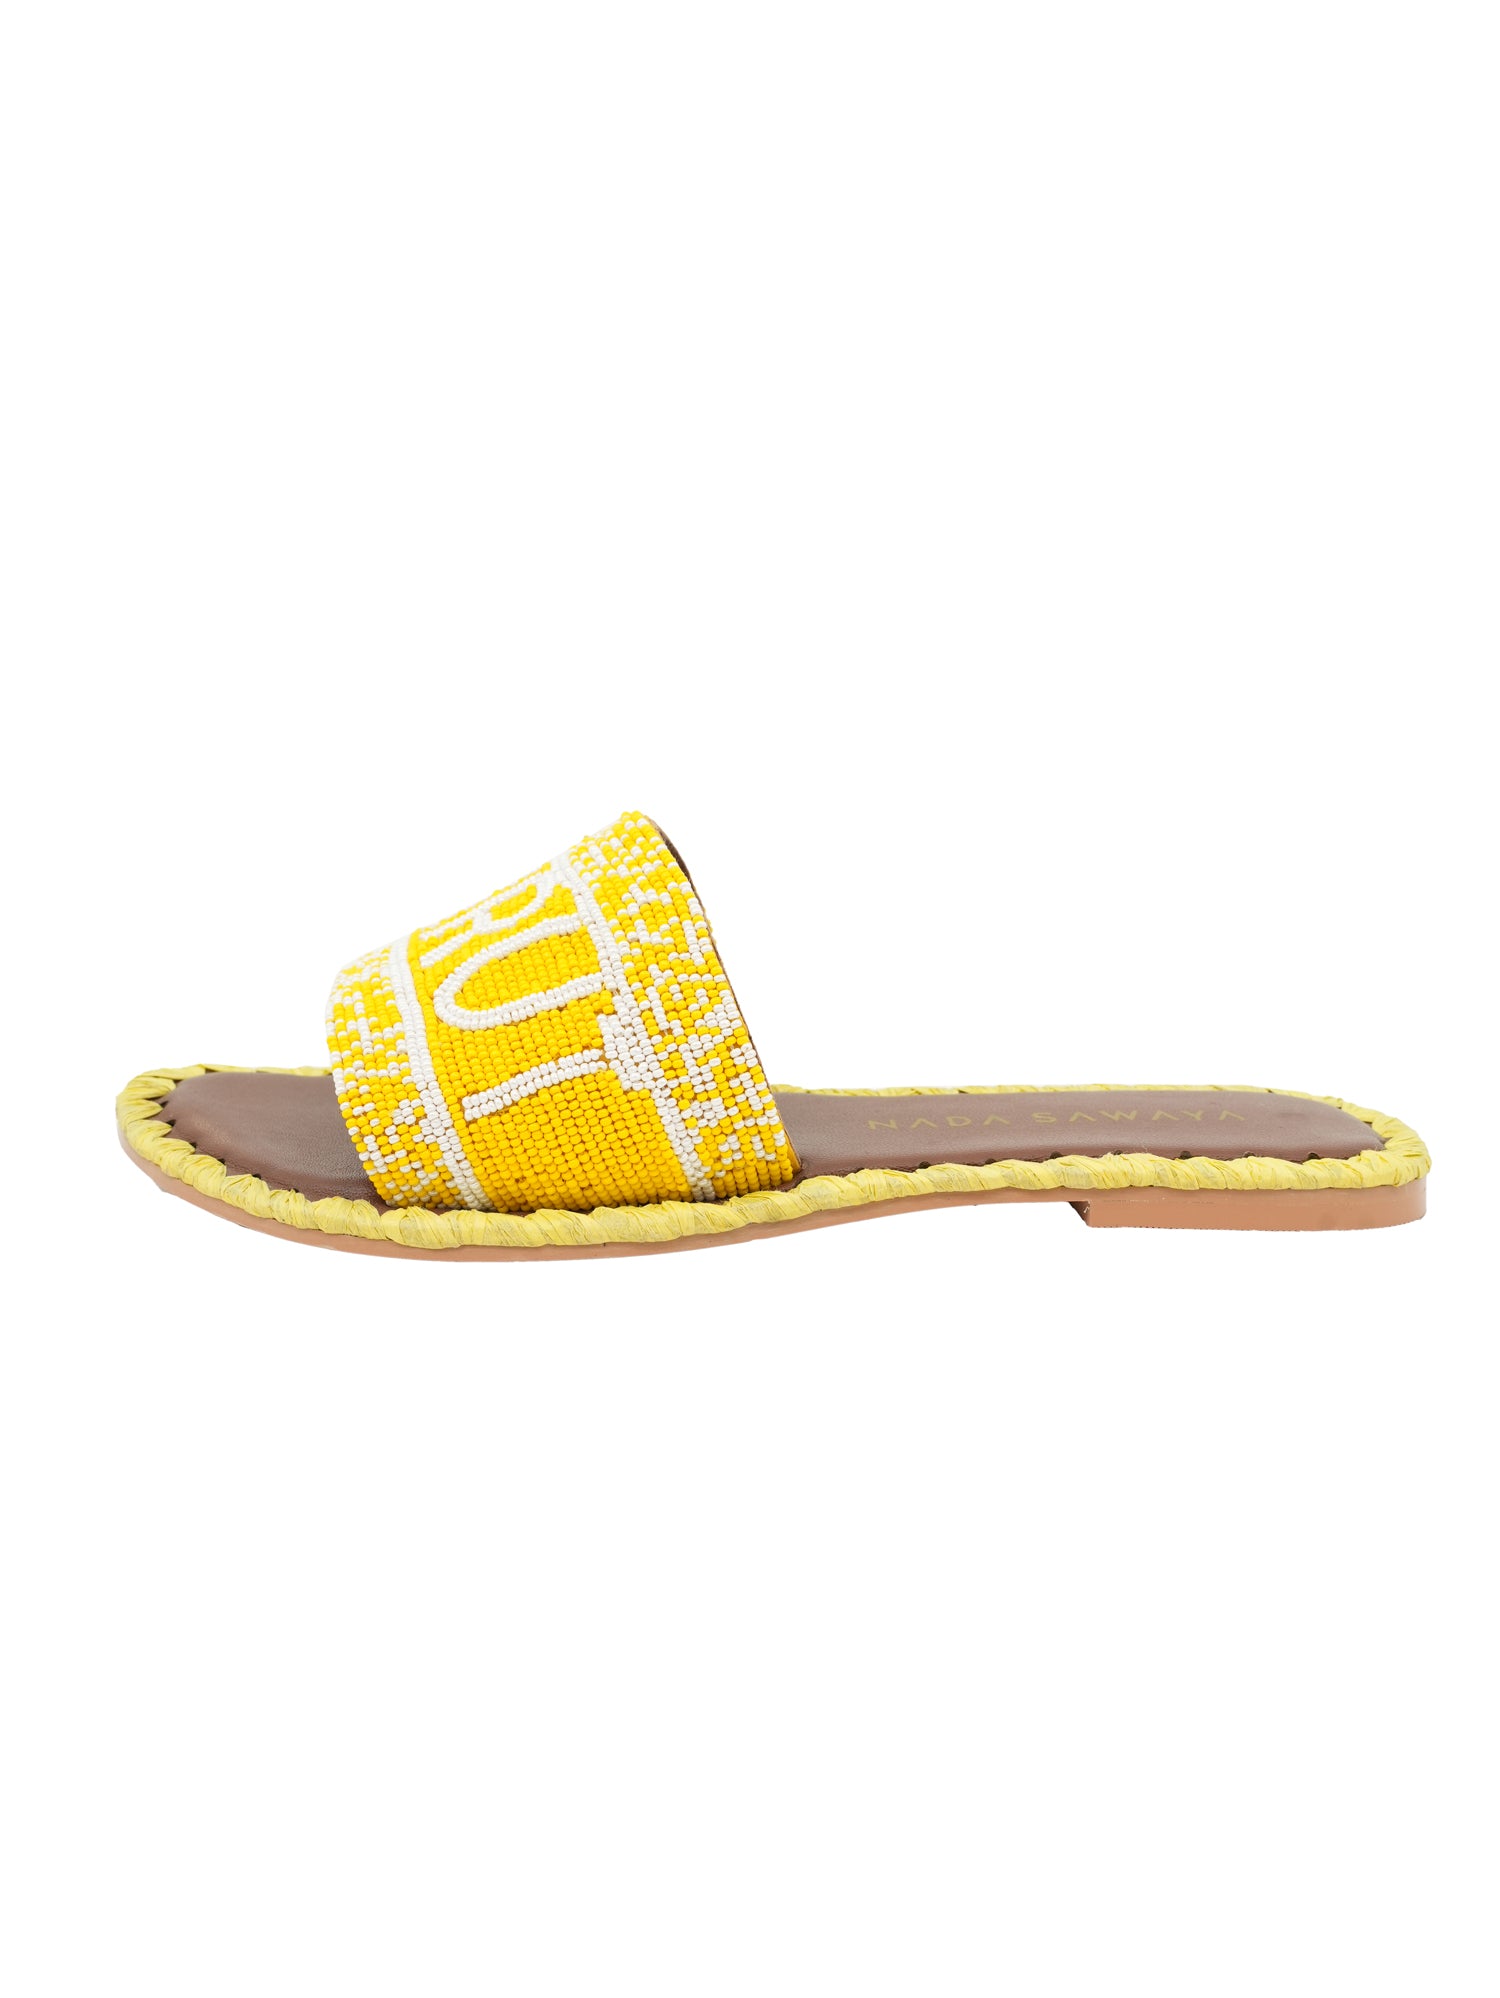 Beirut Beaded Sandals - Yellow